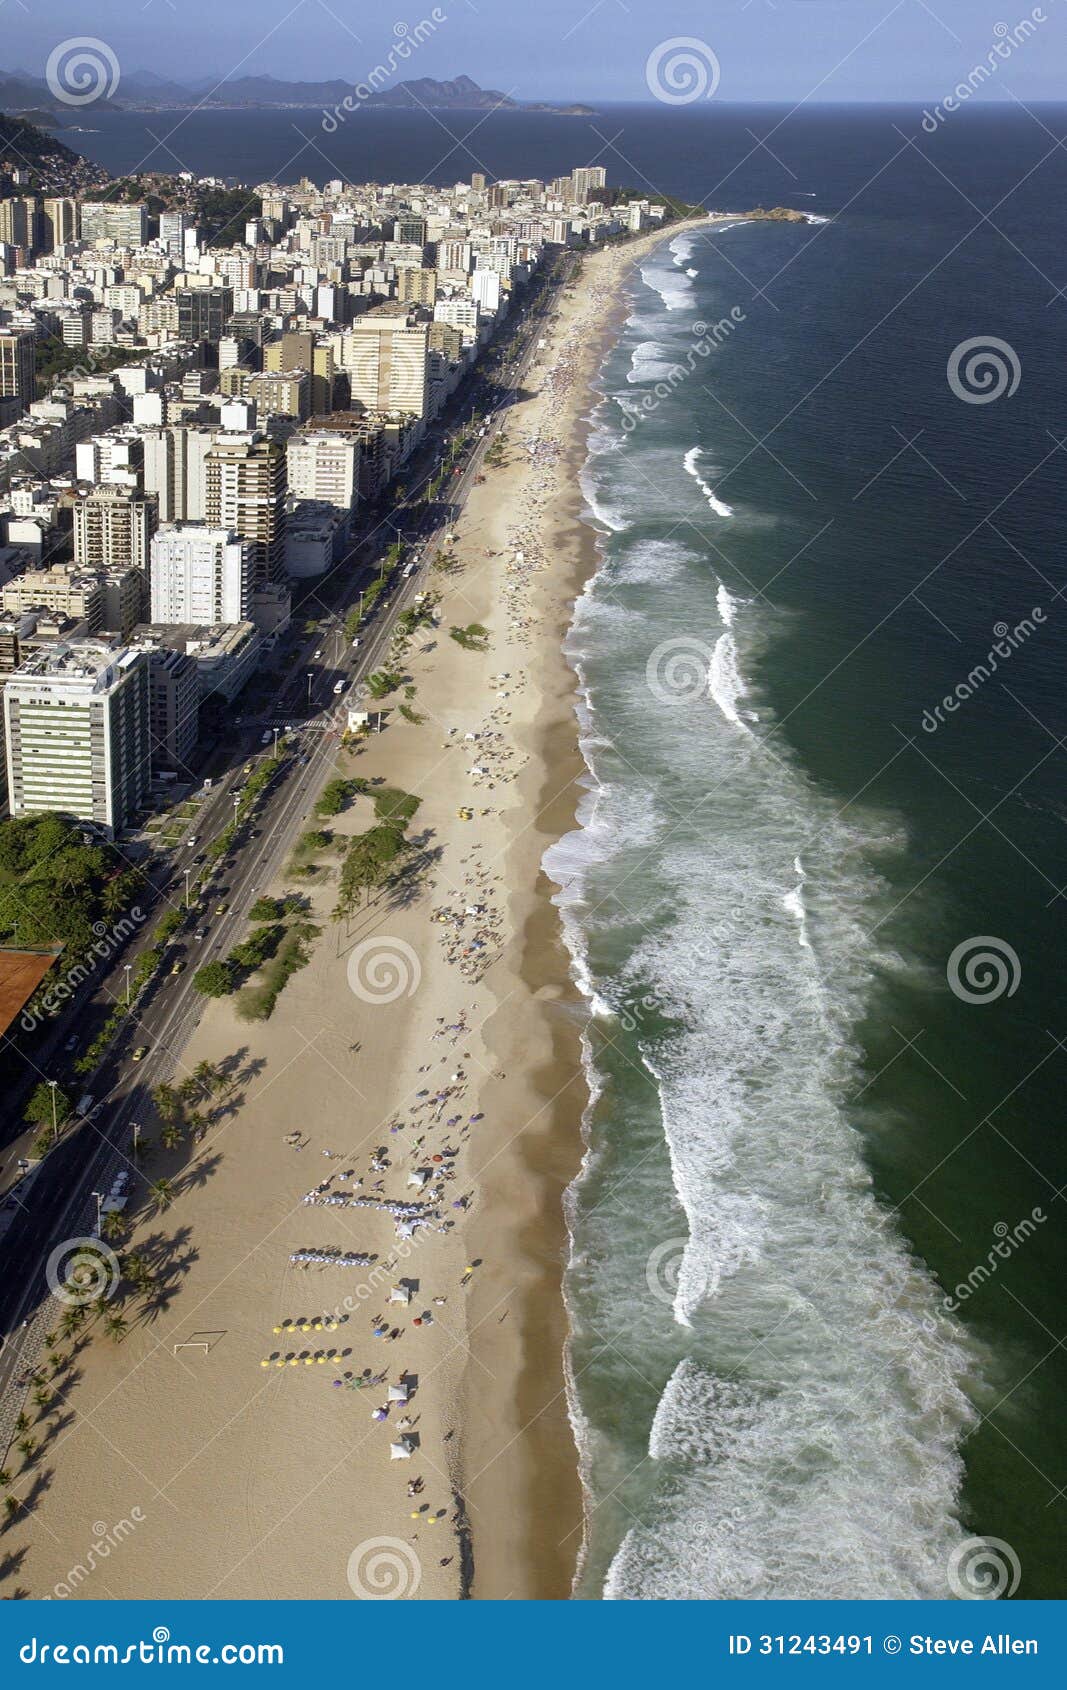 rio de janeiro - ipanema beach - brazil